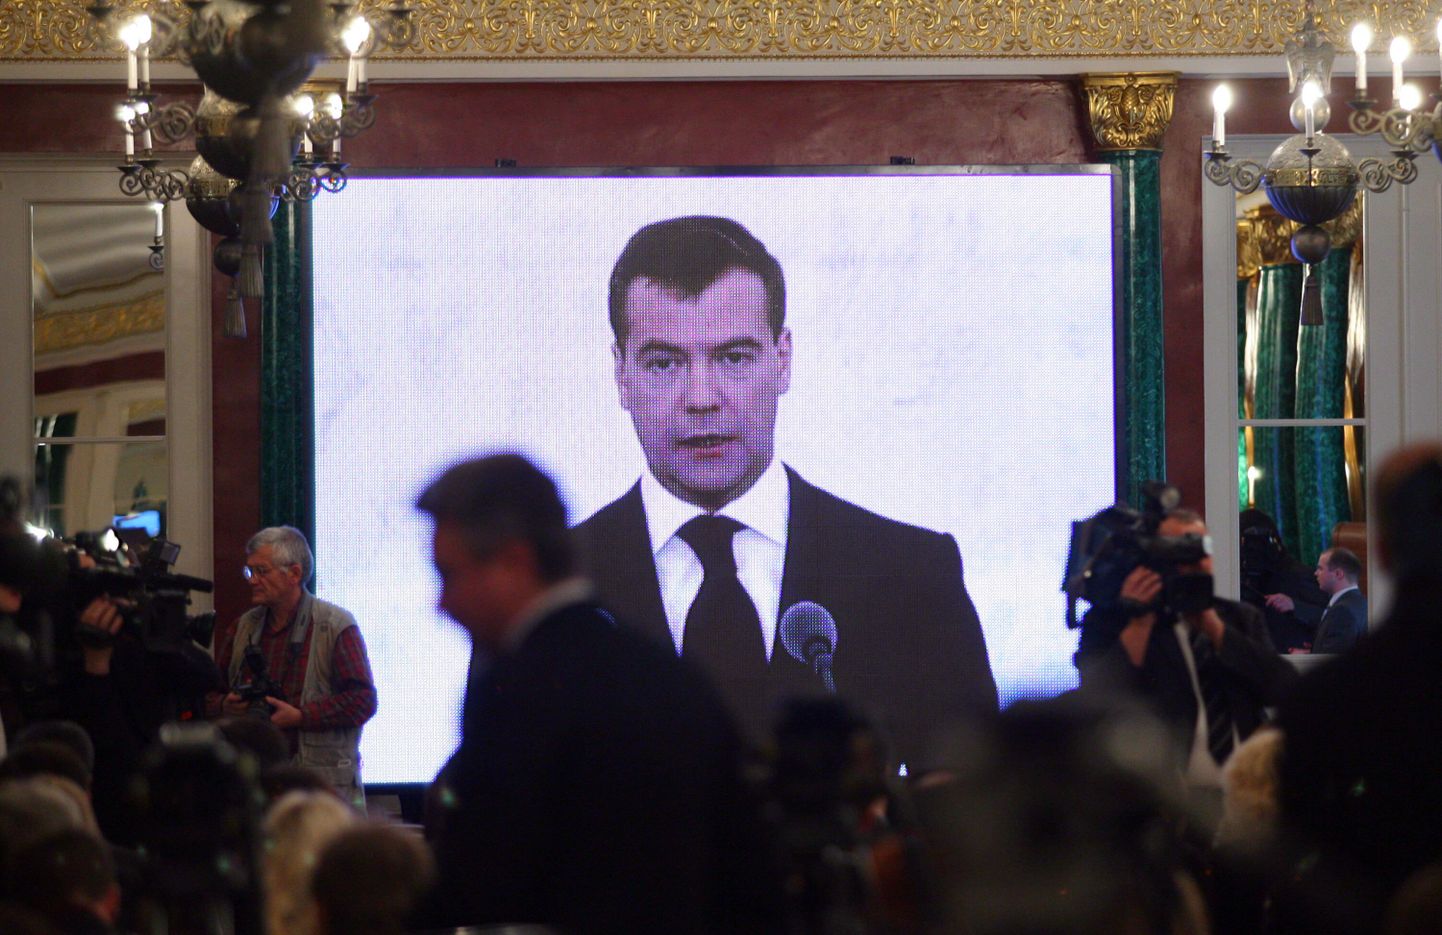 Vene president Dmitri Medvedev suurel ekraanil olukorrast riigis kõnet pidamas.